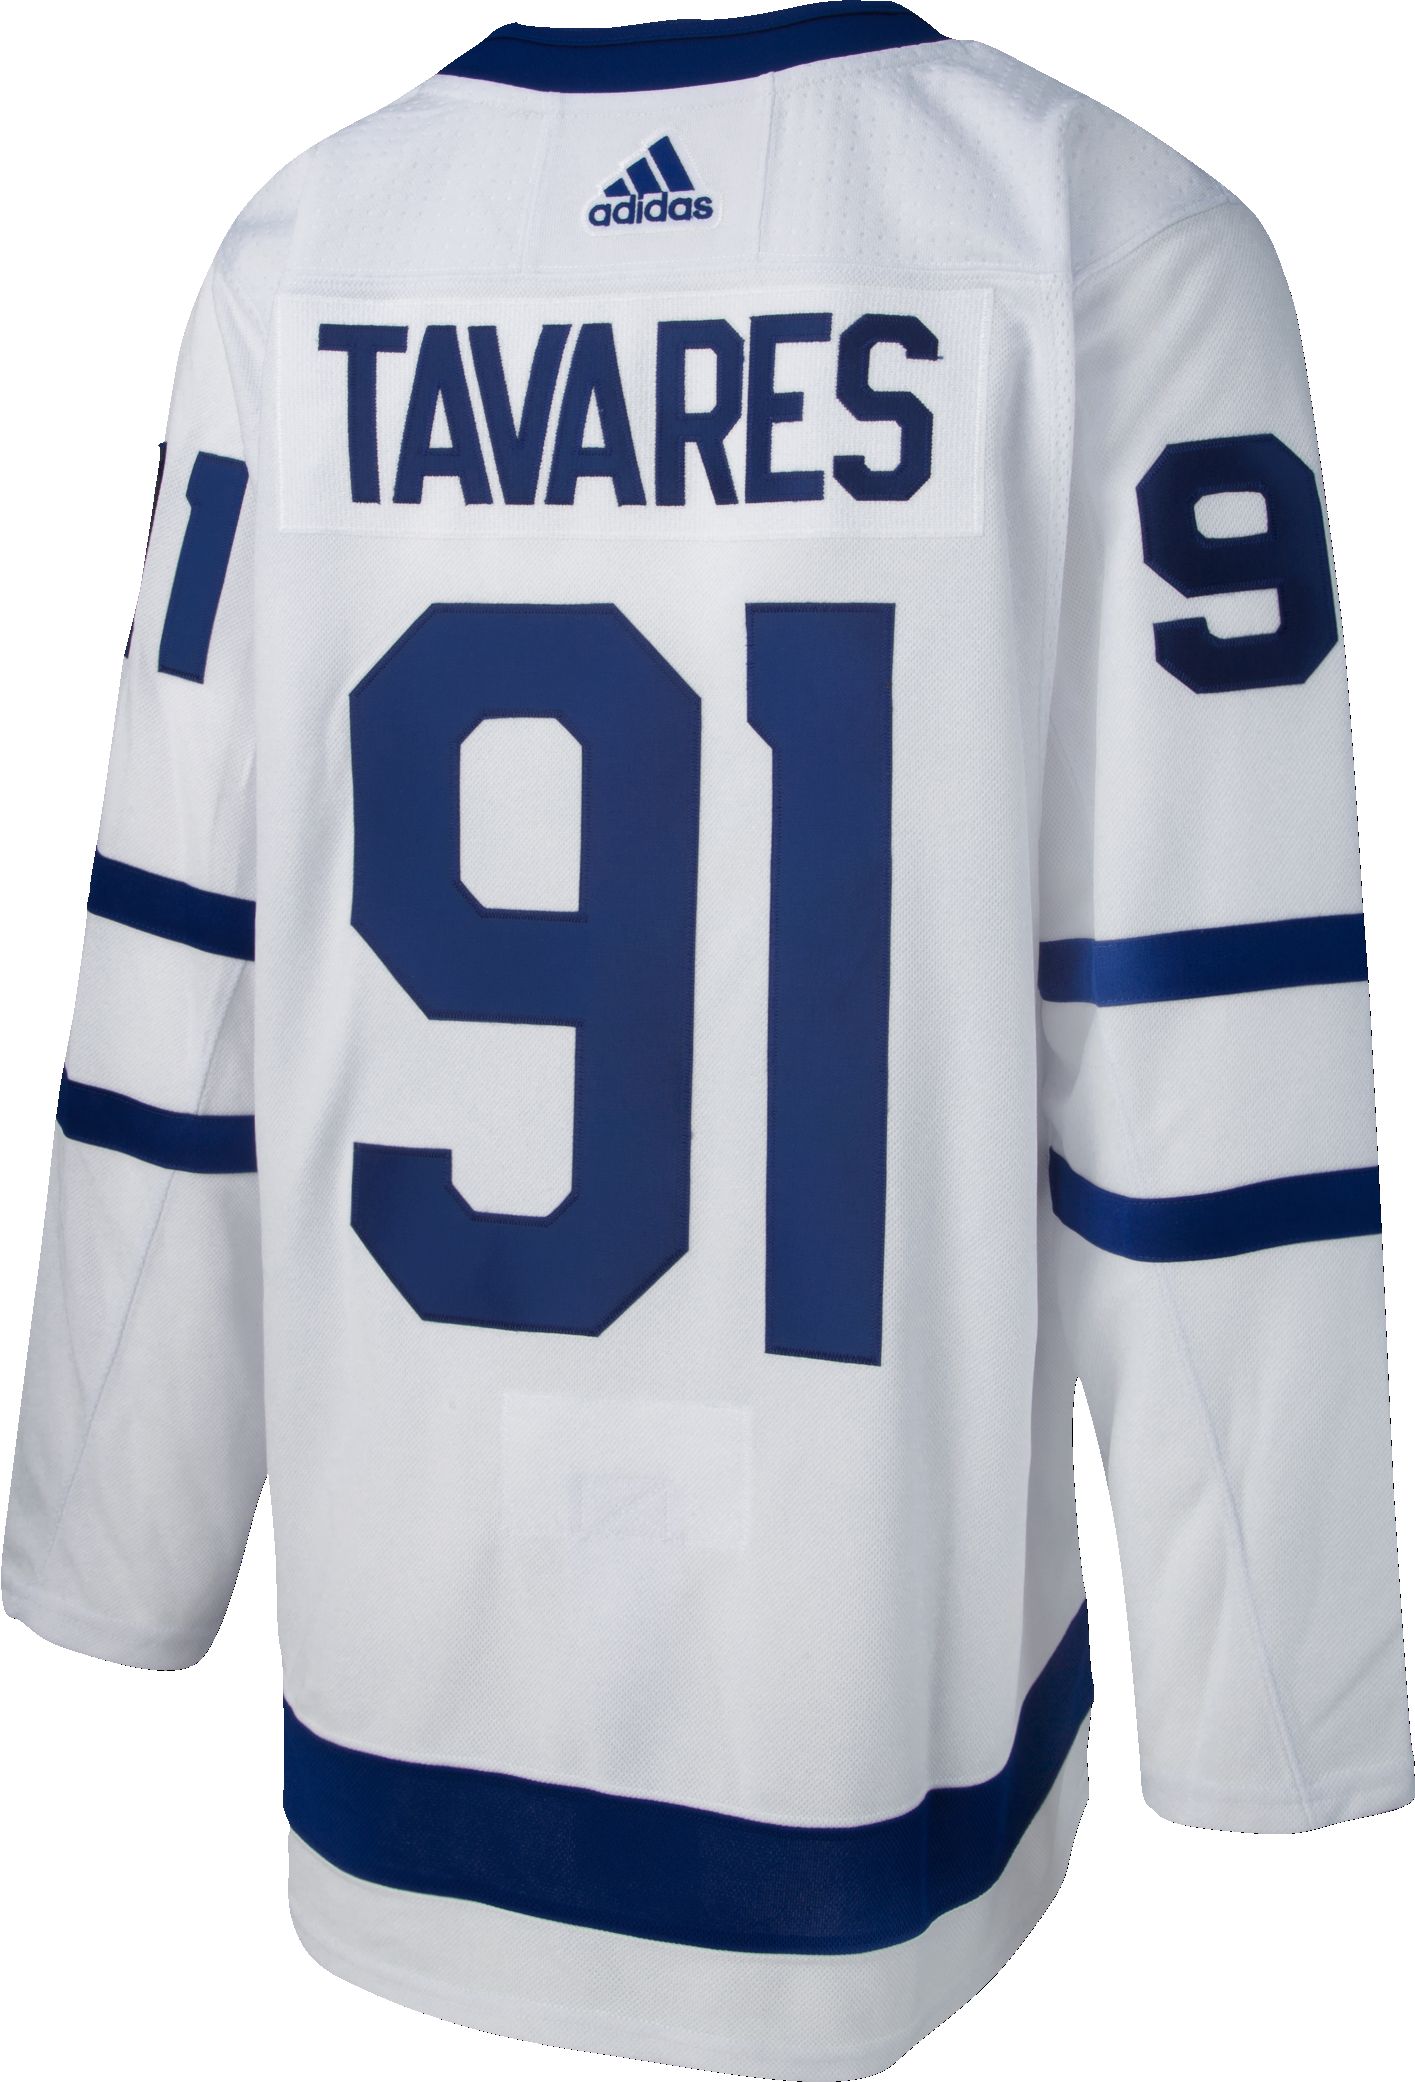 John Tavares Jerseys, John Tavares Shirts, Merchandise, Gear